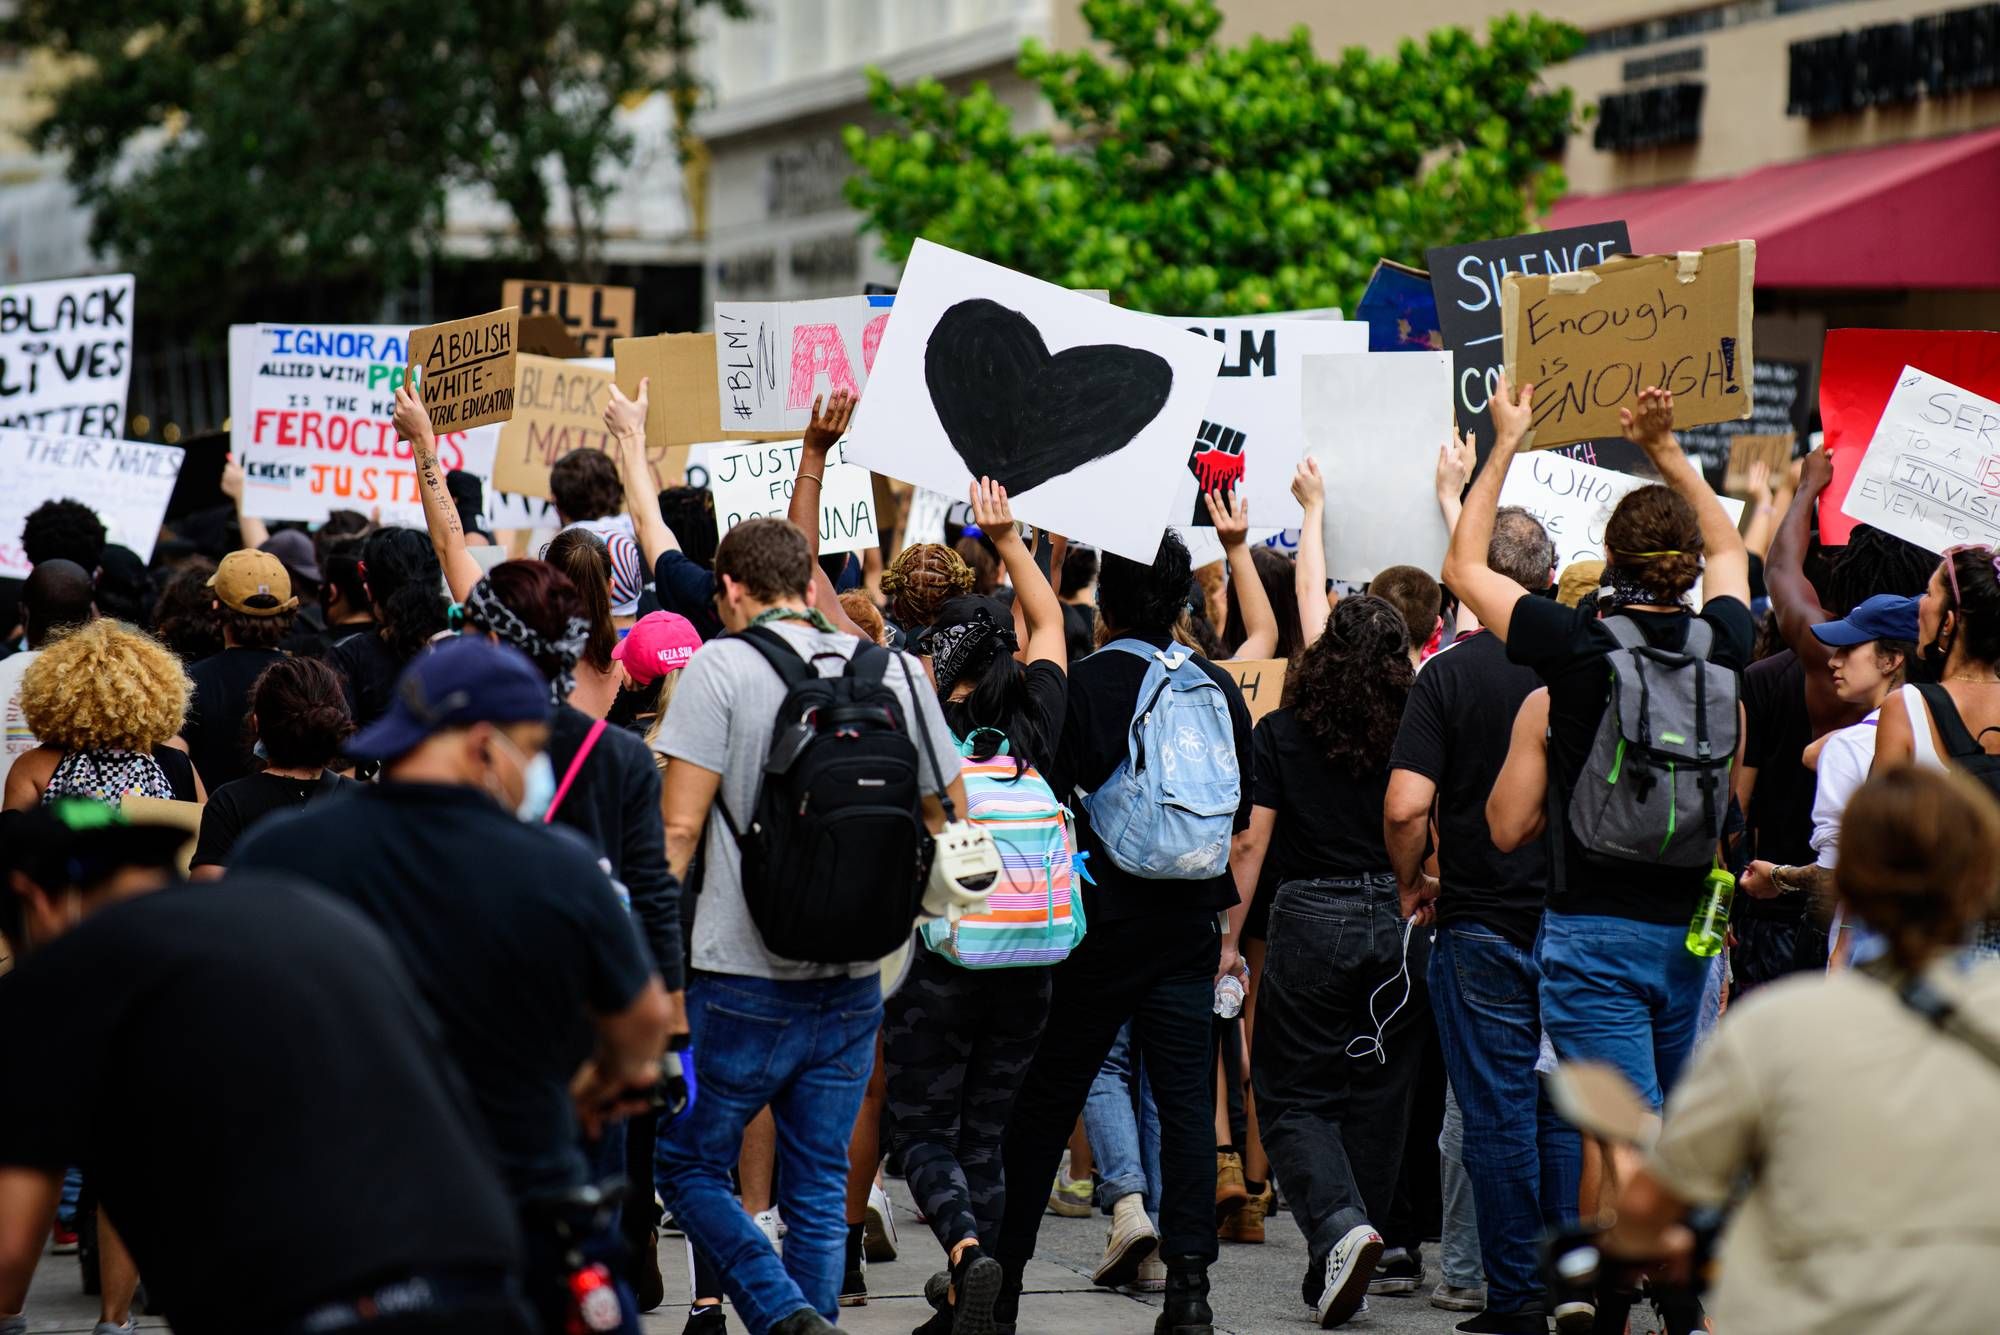 Portland protests against police brutality have sparked legal news developments.